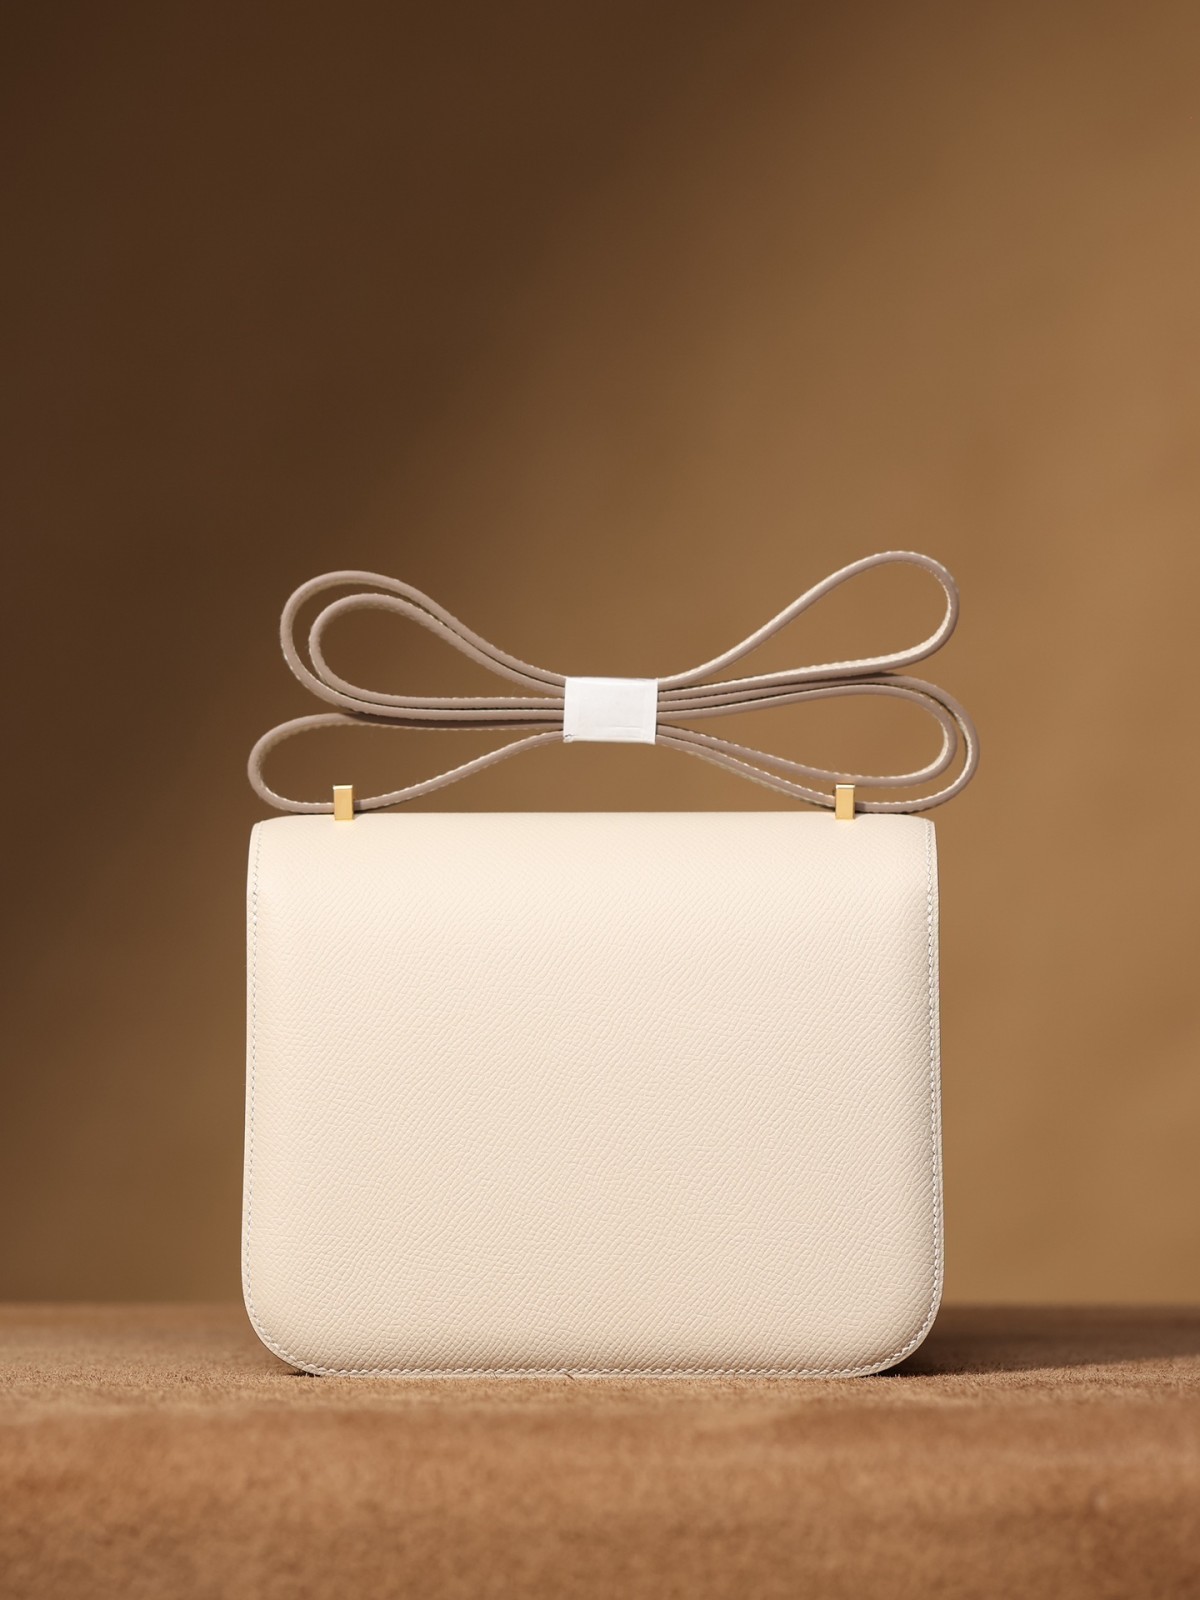 How good quality is a Shebag handmade replica Hermes White Constance 19 bag? (2023 updated)-בעסטער קוואַליטעט שווינדל לוי ווויטטאָן באַג אָנליין קראָם, רעפּליקע דיזיינער זעקל רו